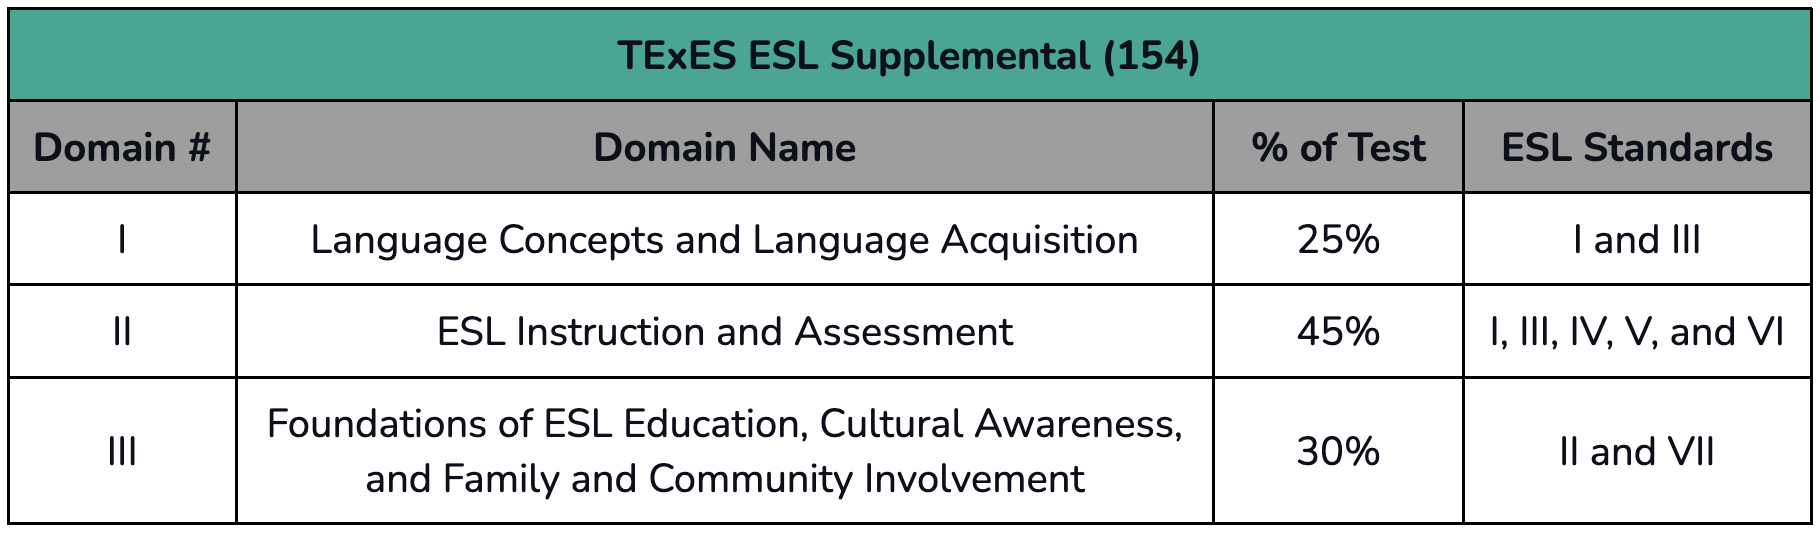 TExES ESL Supplemental Domains